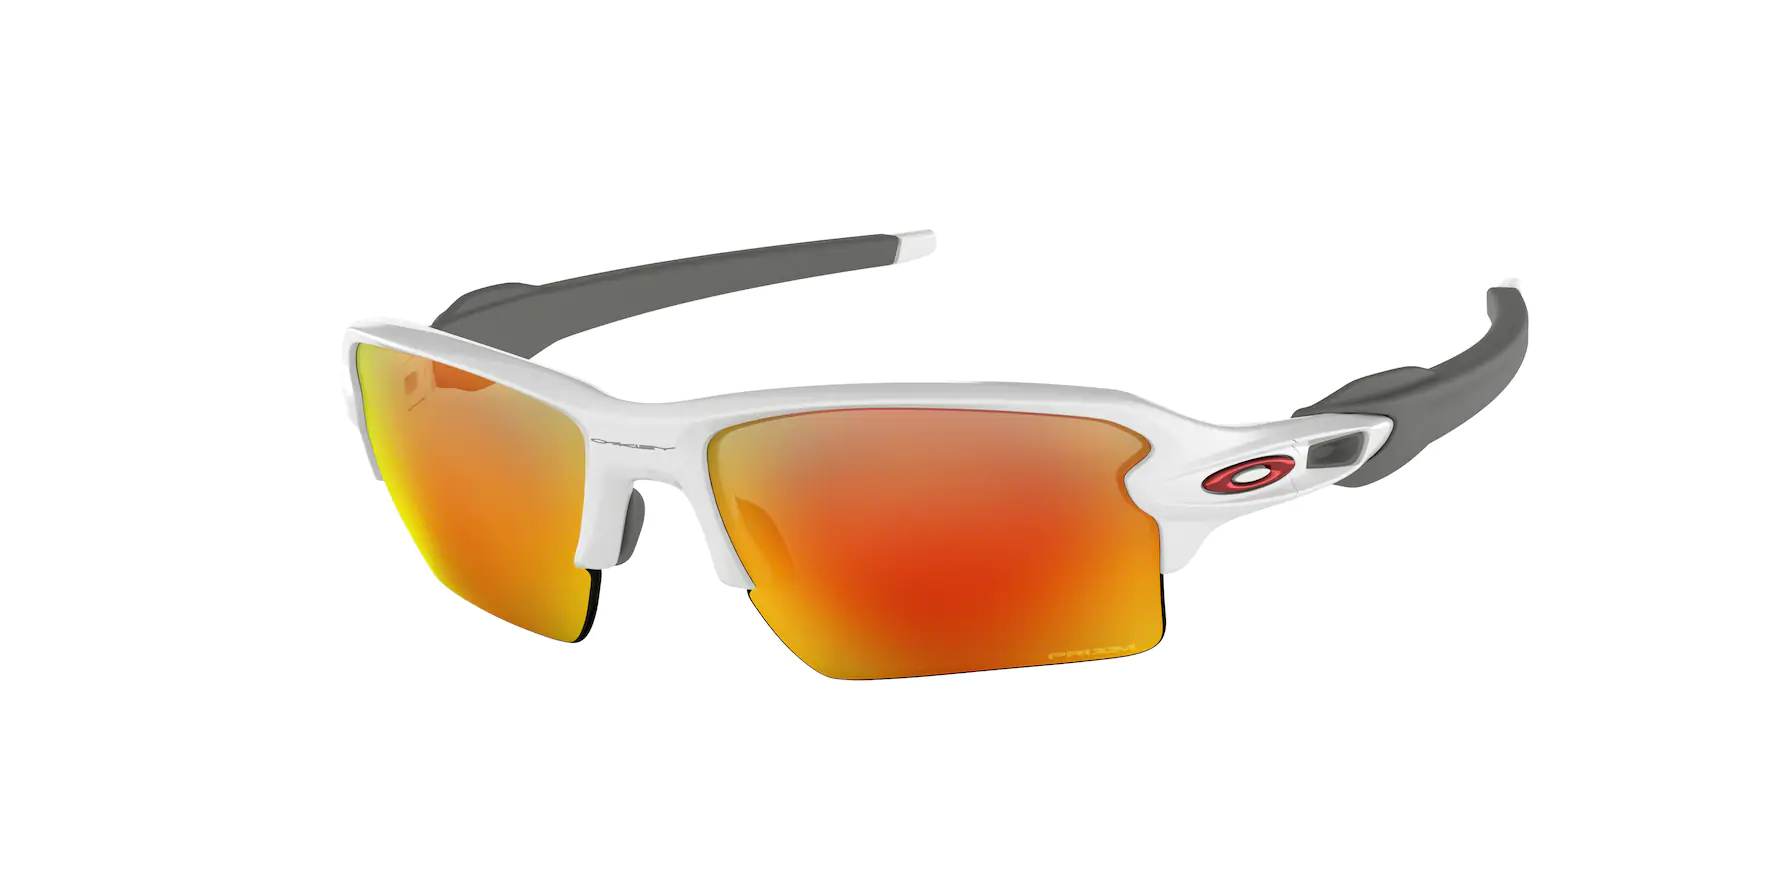 Oakley Flak 2.0 XL Black Camo Sunglasses